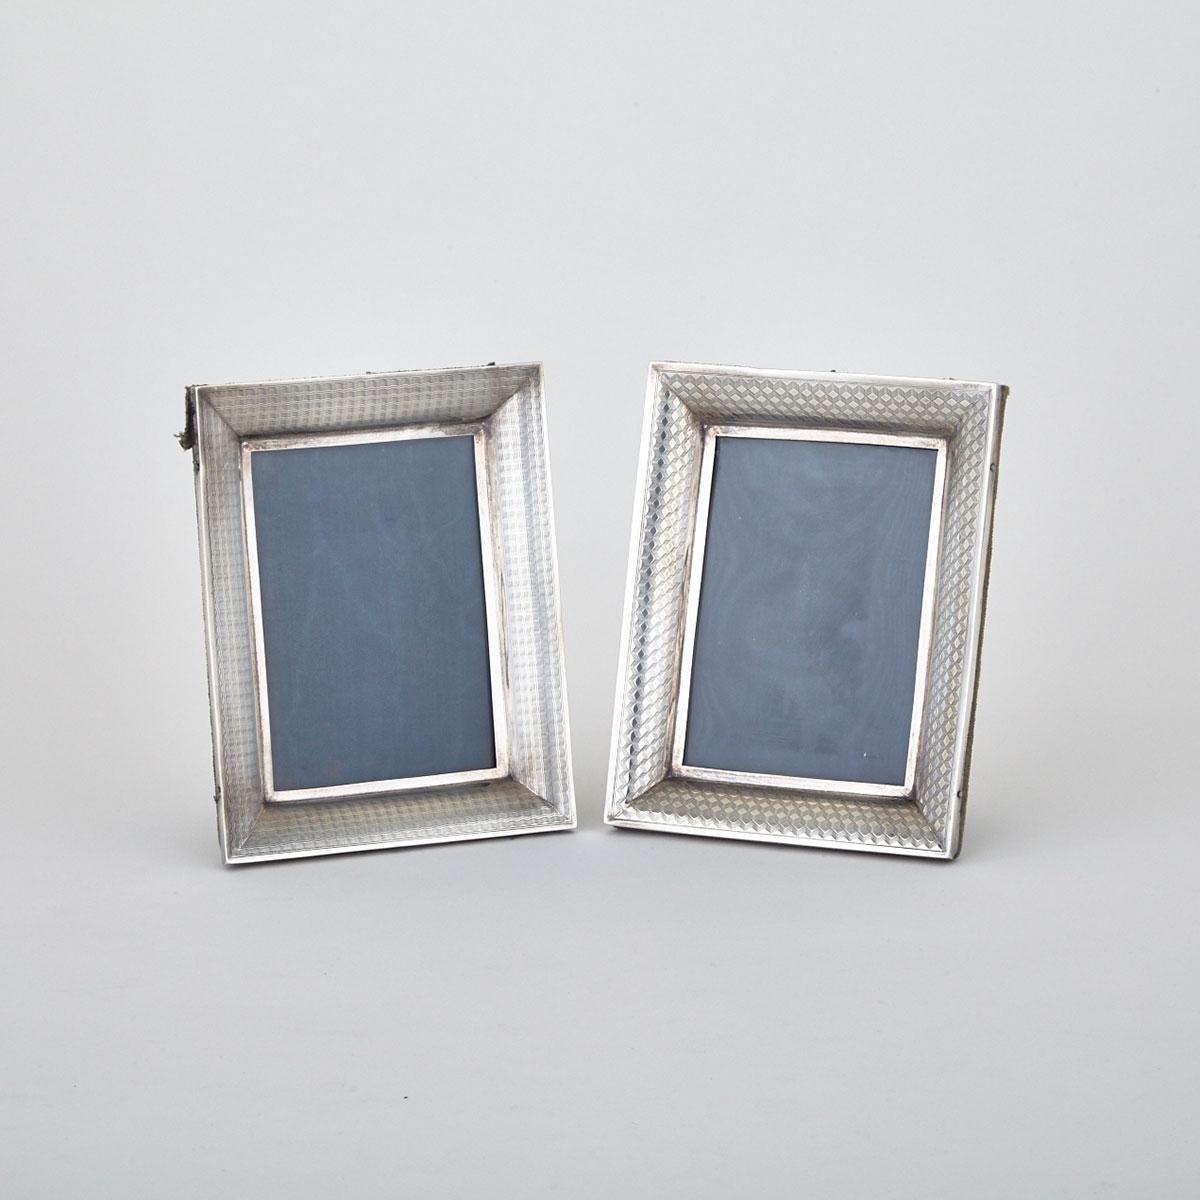 Pair of English Silver Rectangular Photograph Frames, William Hutton & Sons, Birmingham, 1910